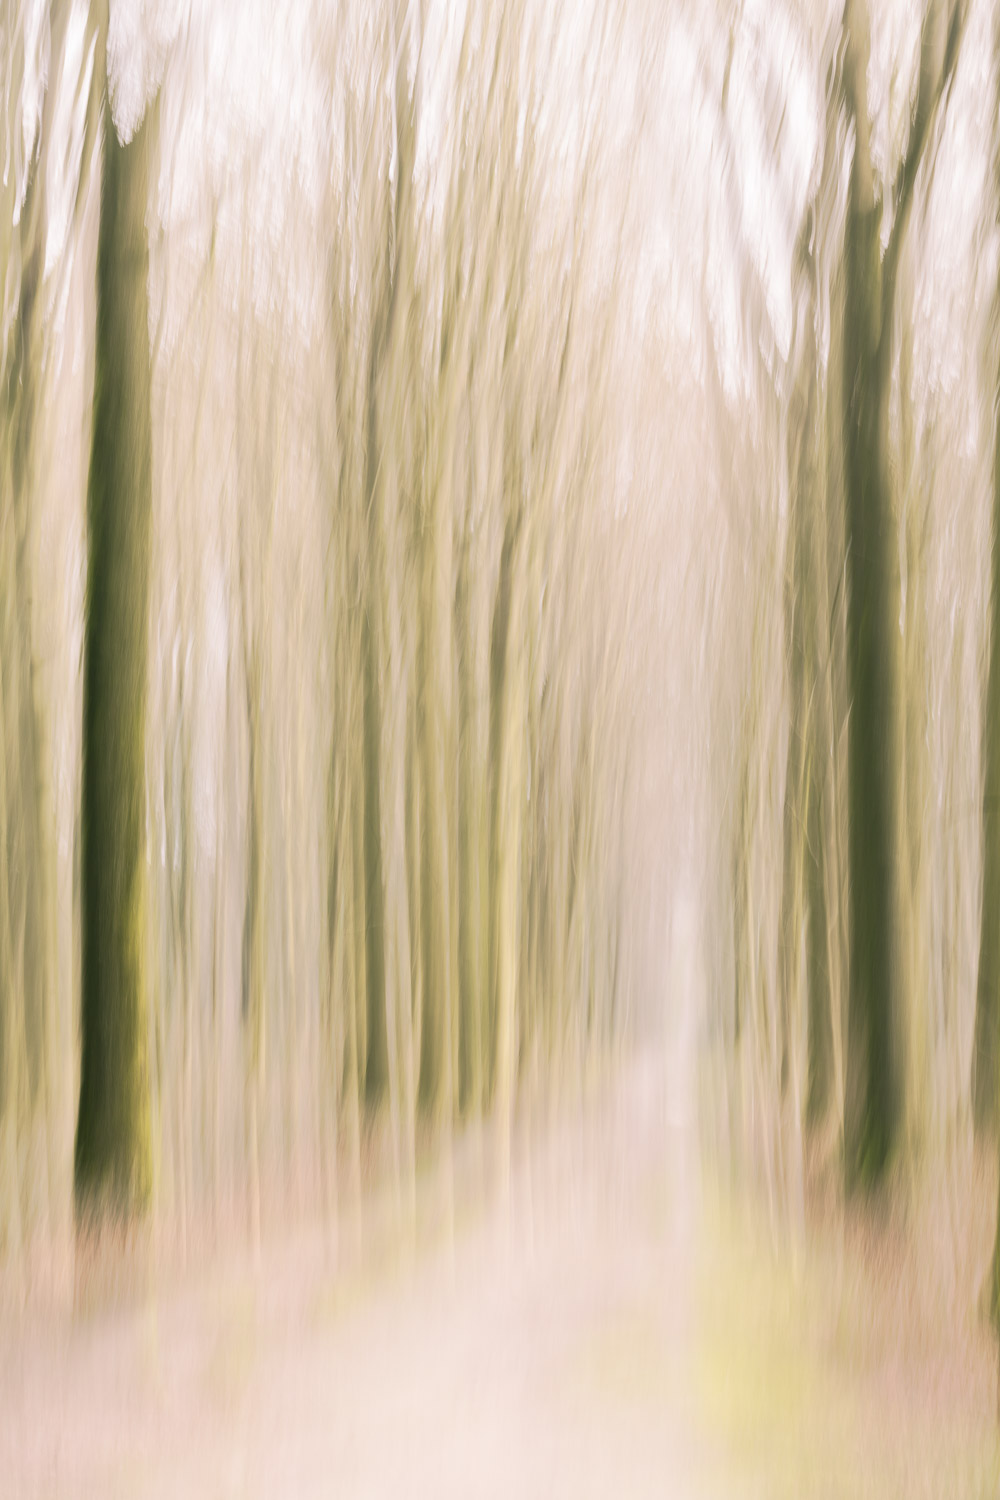 Fine art image of a forest by Karen Ketels